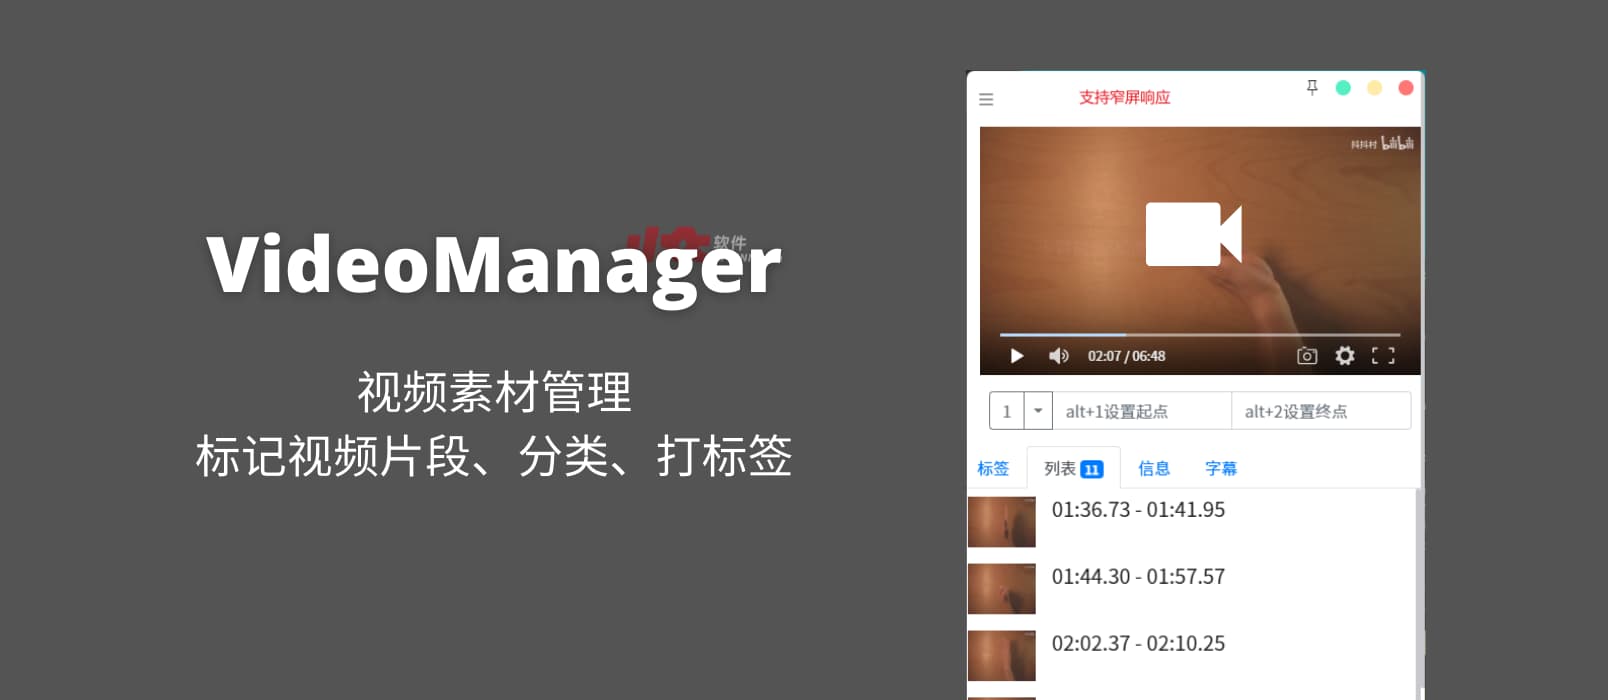 VideoManager - 视频素材管理：标记视频片段标记、分类、打标签，然后批量搜索导出[Windows] 1